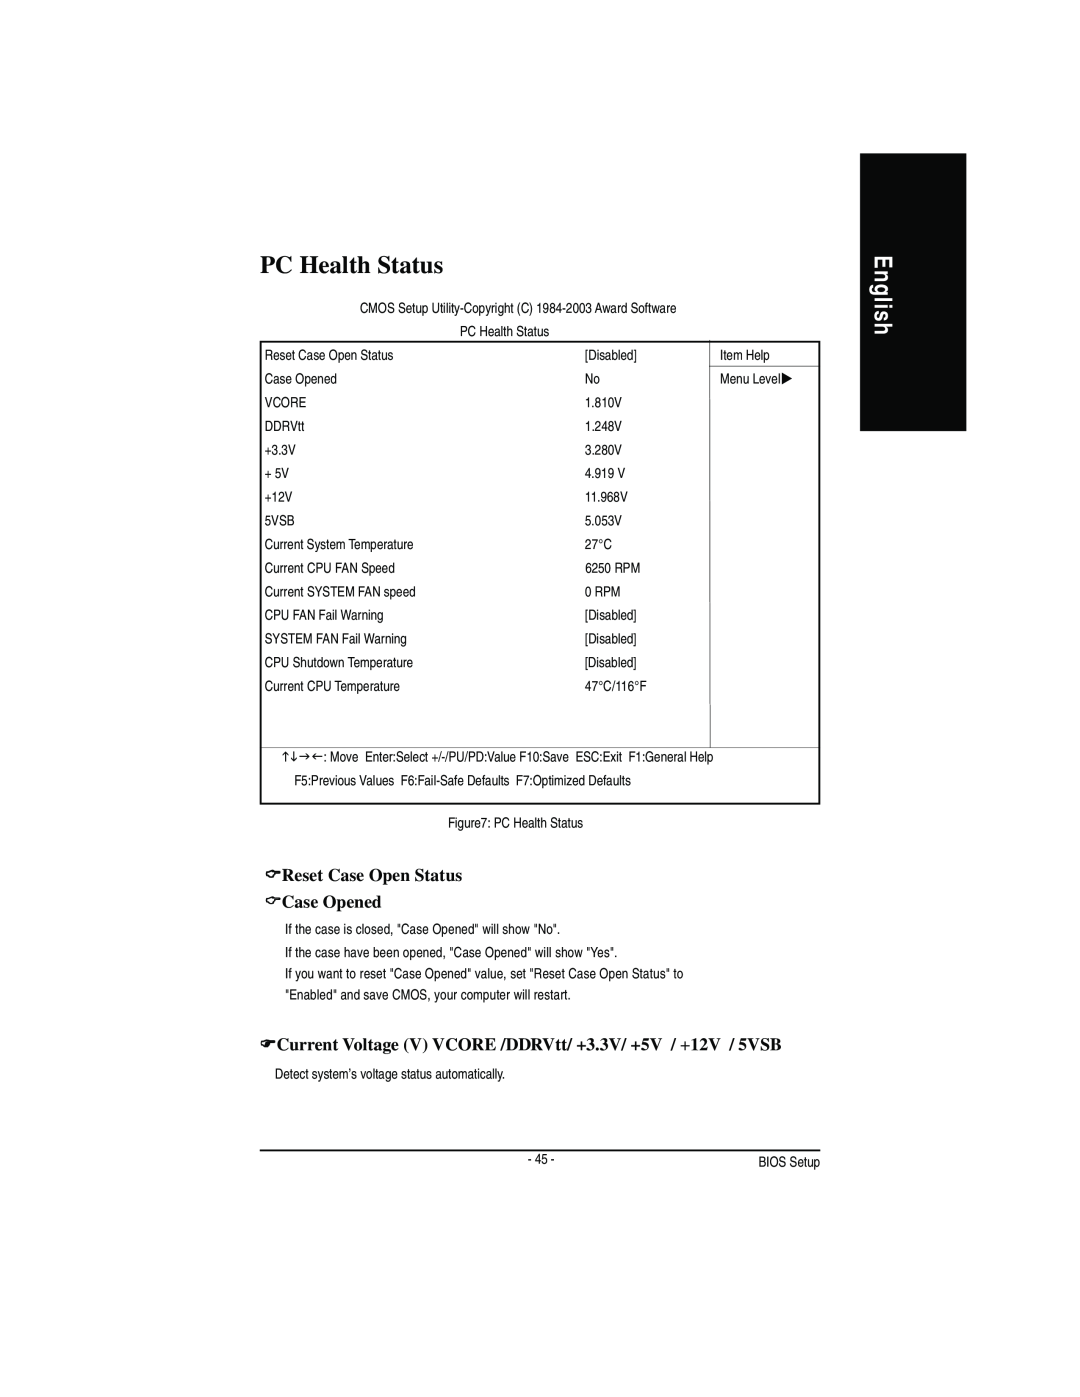 Gigabyte GA-7VA manual PC Health Status, English, CReset Case Open Status CCase Opened 